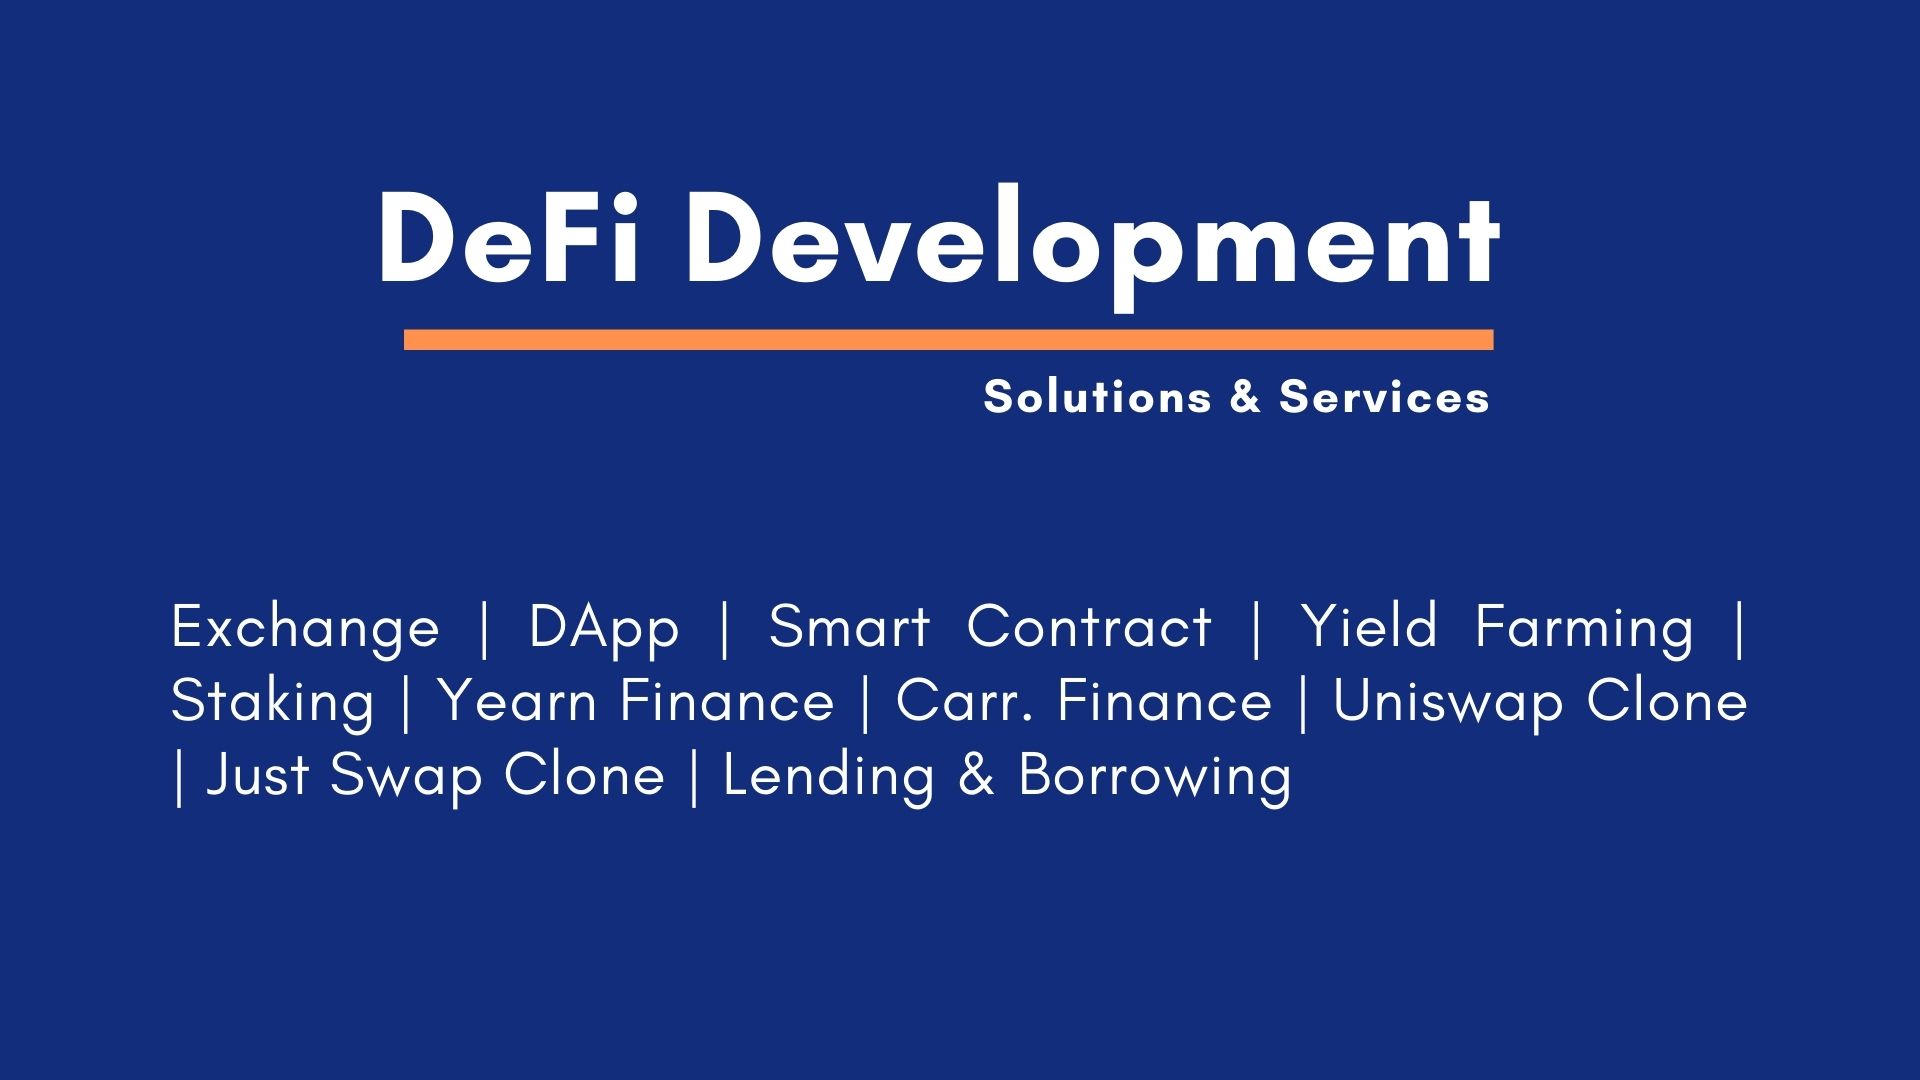 DeFi Development Company | DeFi Development Services | DeFi Development